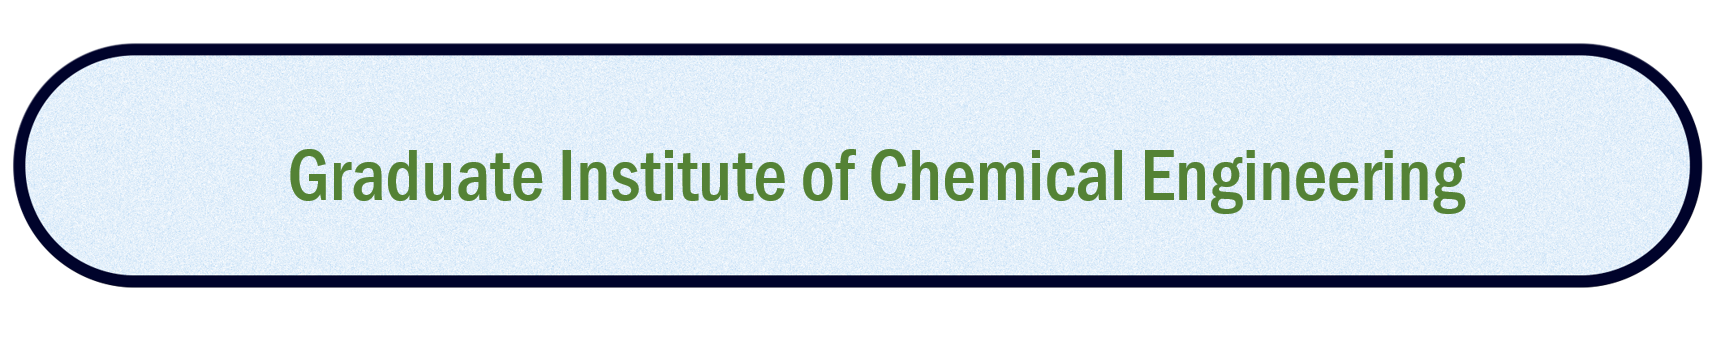 Graduate Institute of Chemical Engineering